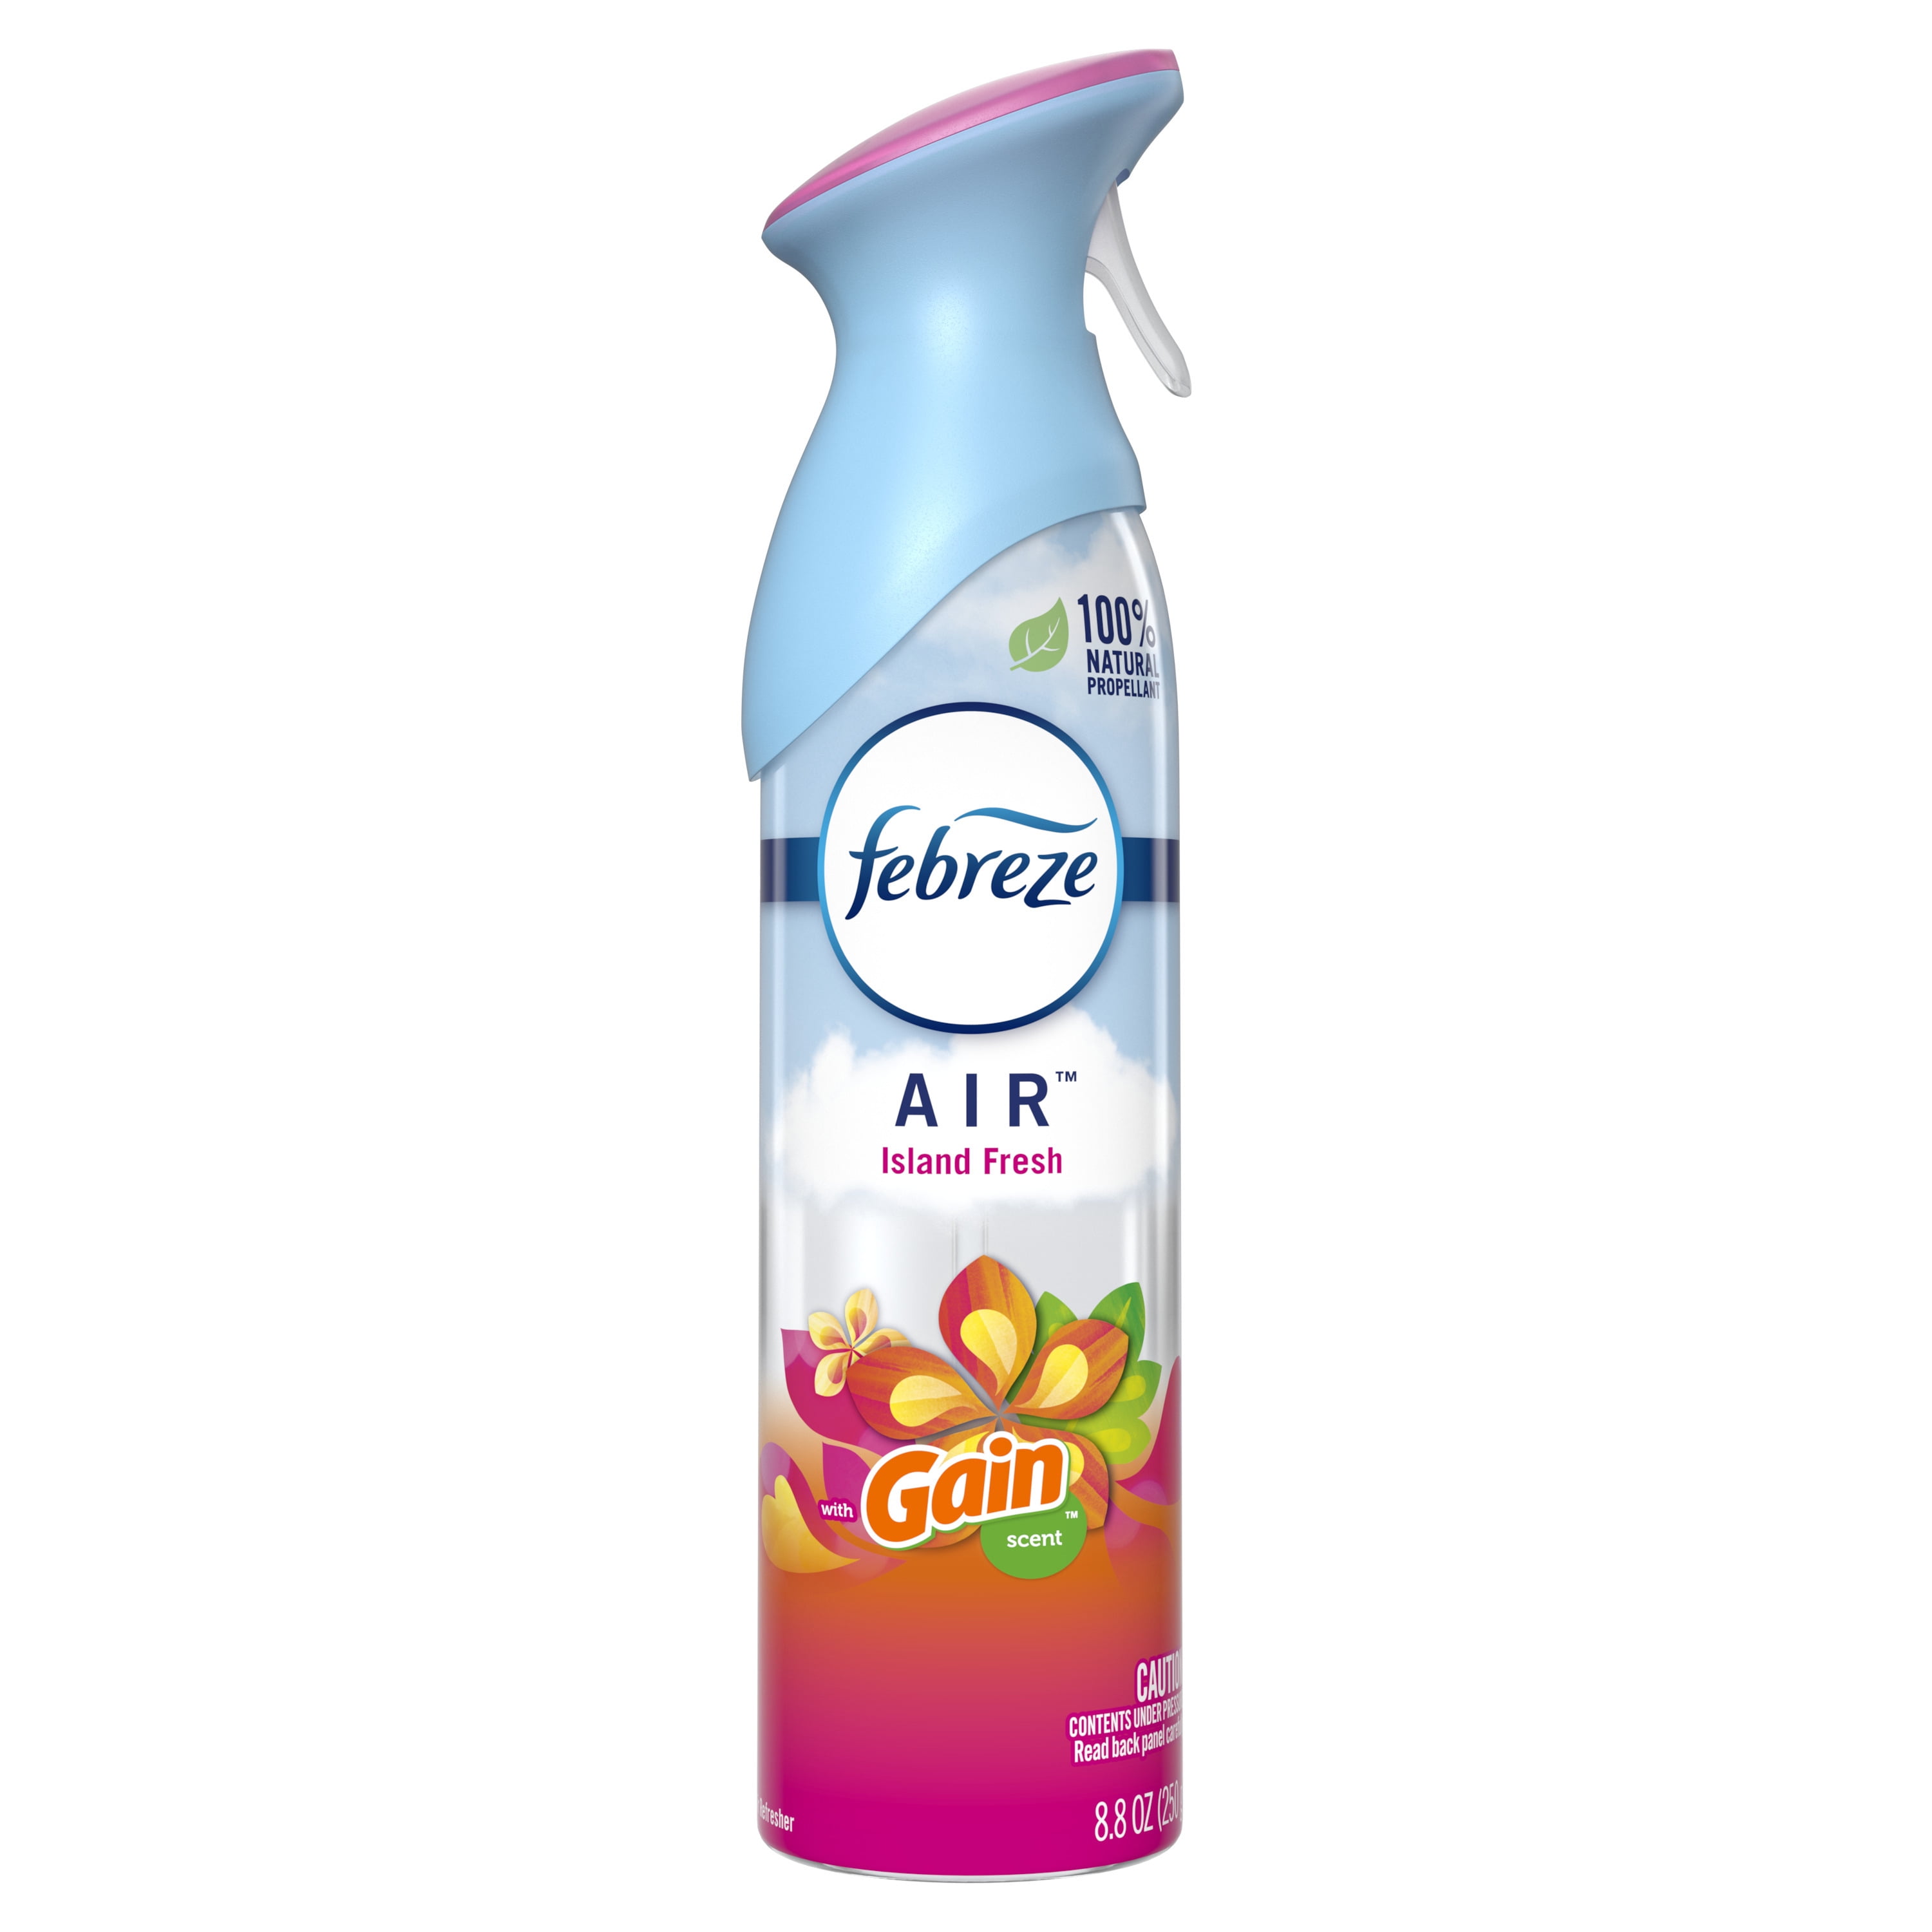 Febreze Odor-Fighting Air Freshener, Gain Island Fresh Scent, 8.8 oz